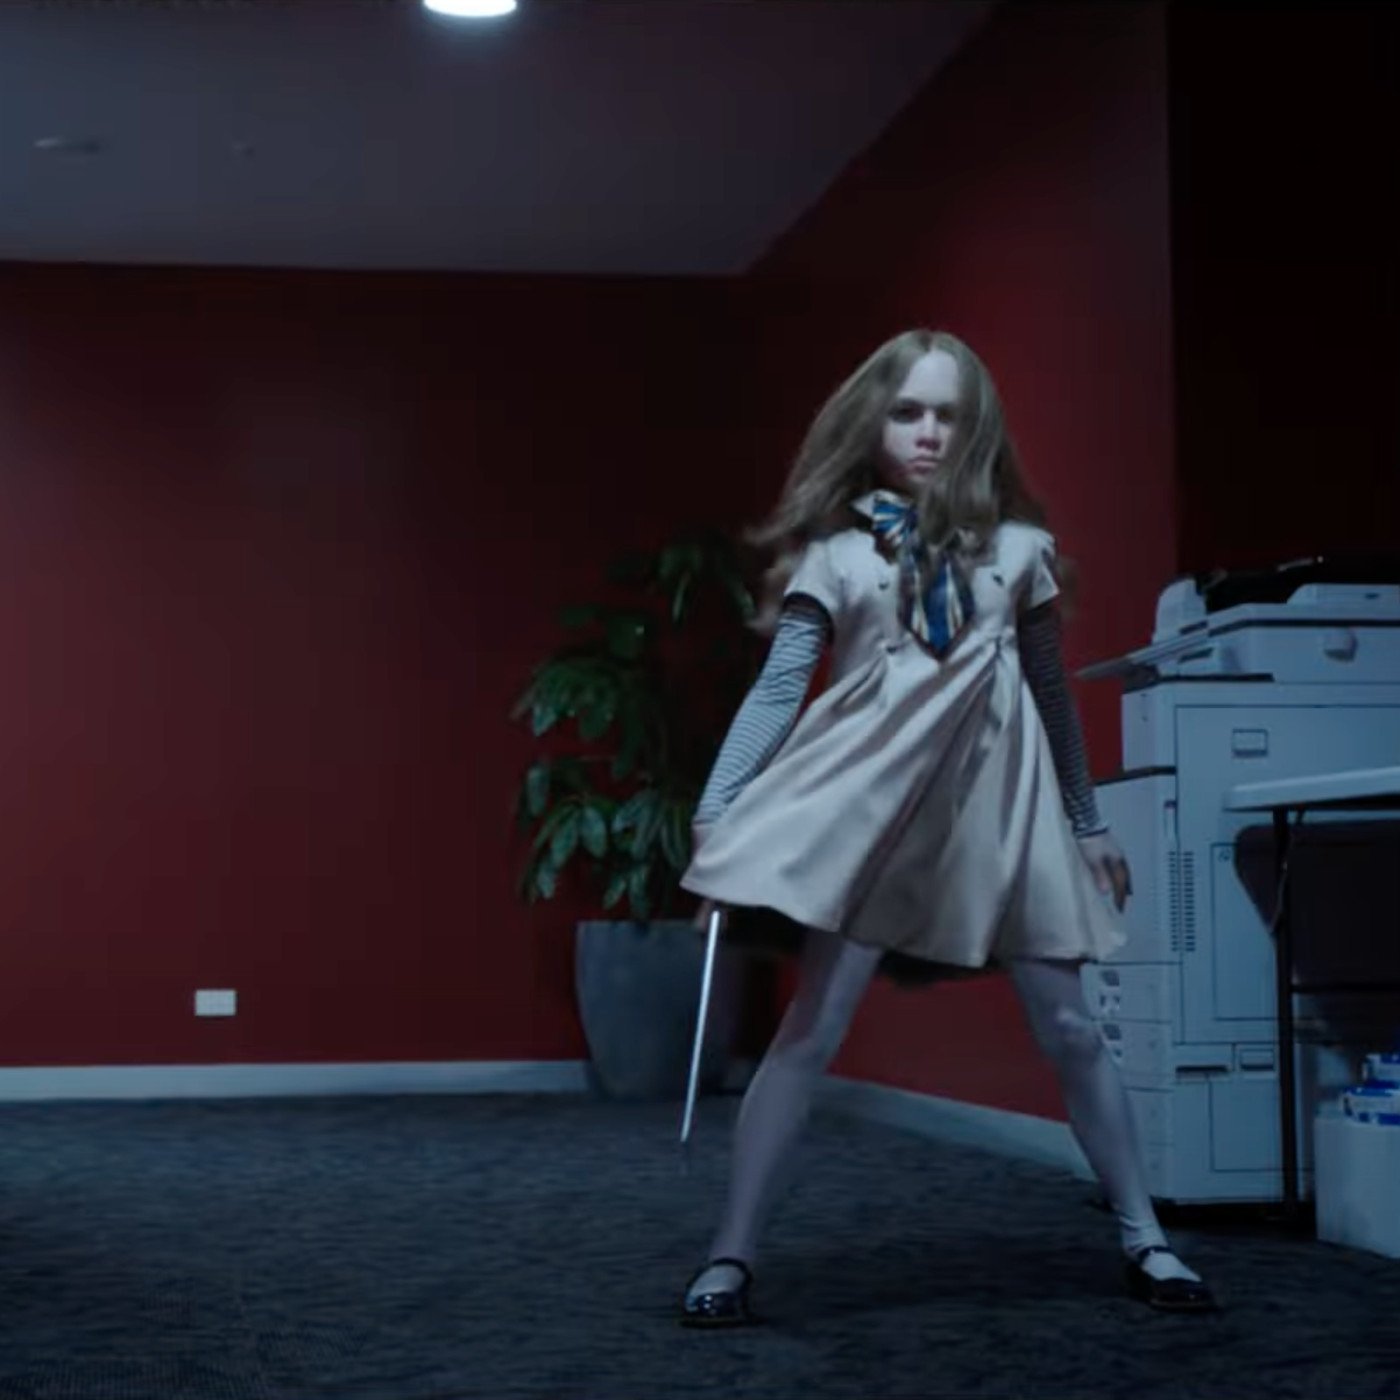 M3GAN trailer stars a dancing robot girl who murders people